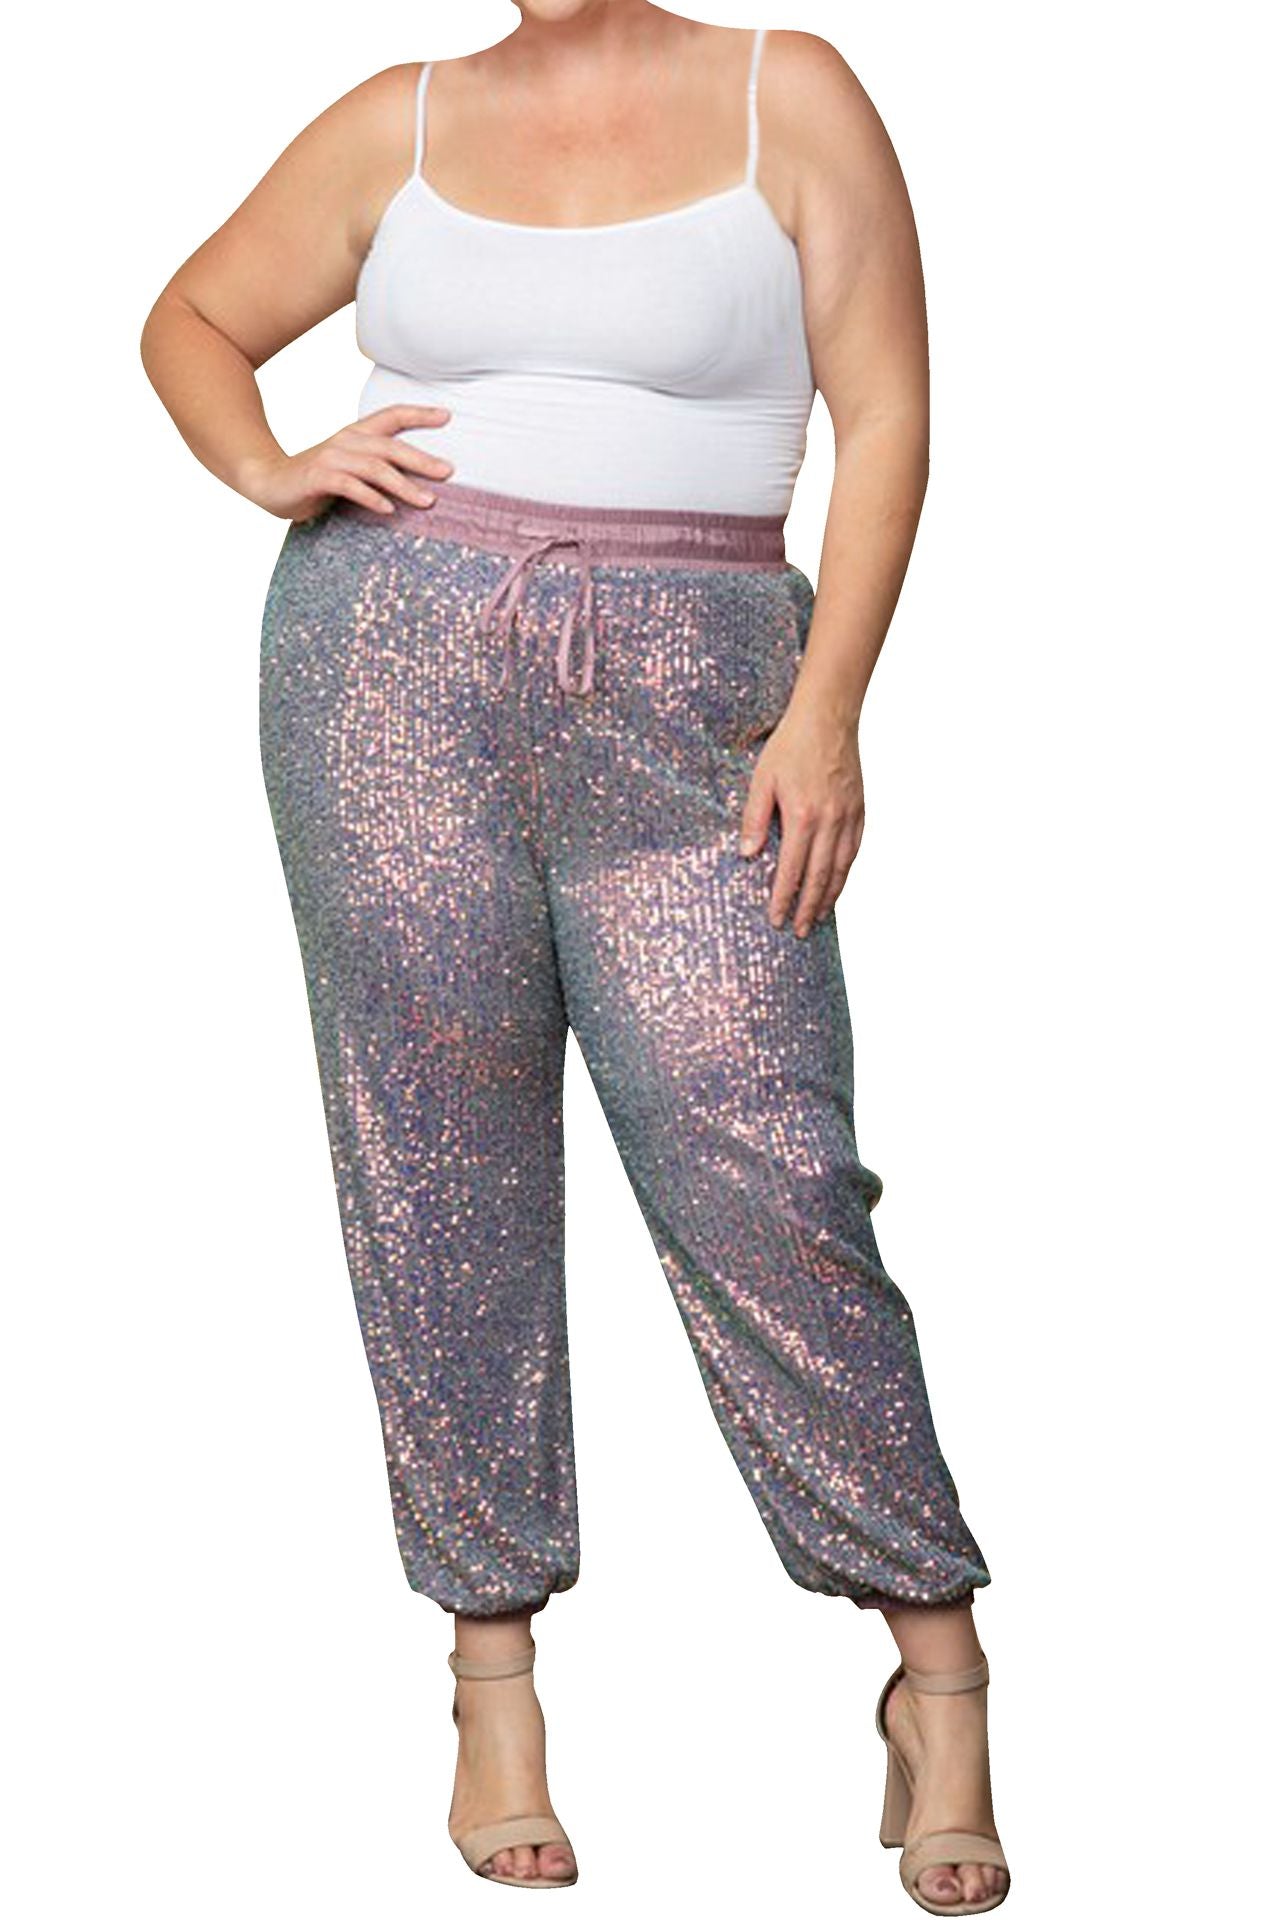 "sequin pants jogger" "sequin jogging bottoms" "Kyle X Shahida" "plus size sequin jogger pants" "sequins joggers"